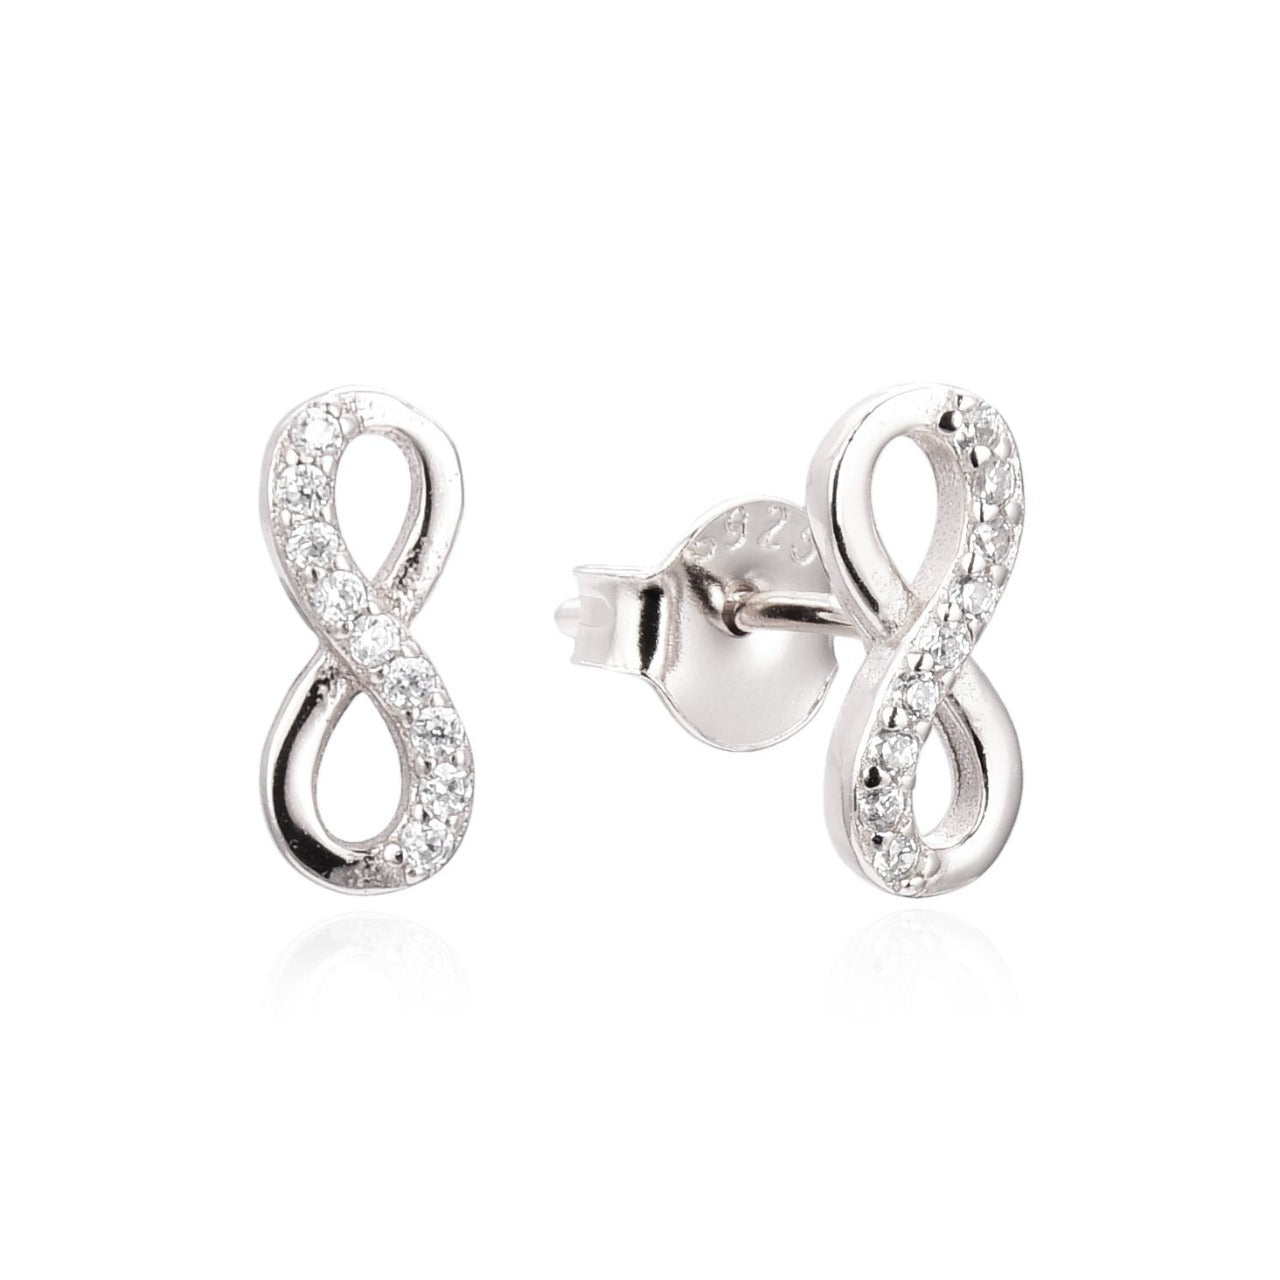 Silver Infinity Stud Earrings by Kilkenny Silver    Sterling silver infinity love stud earrings with cubic zirconia stones.